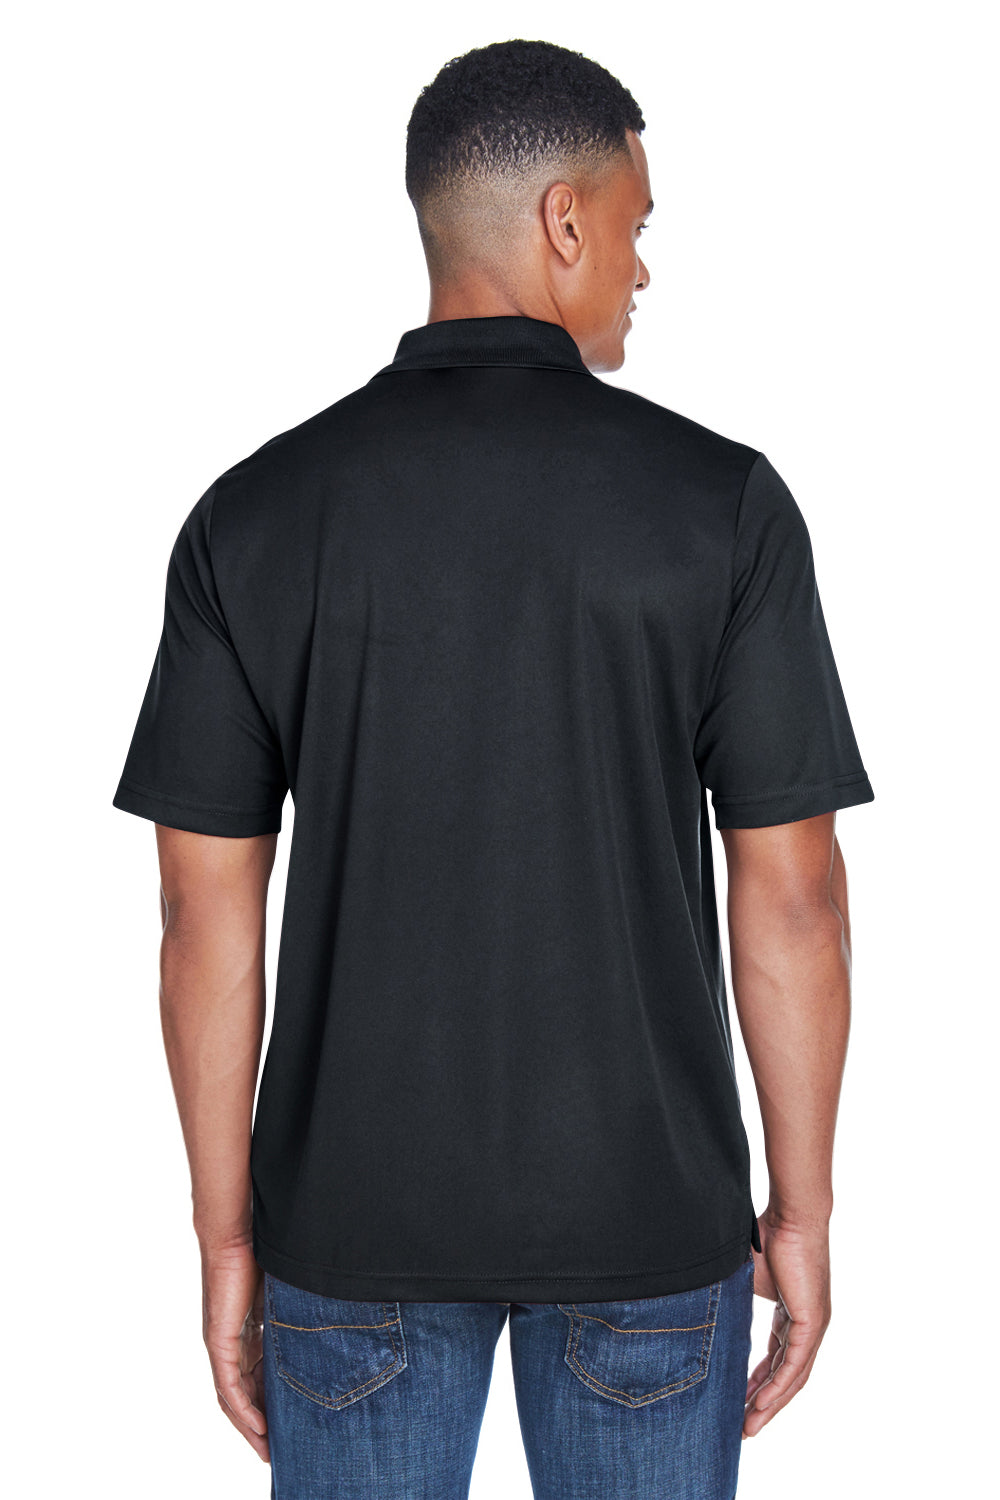 Core 365 88181P Mens Origin Performance Moisture Wicking Short Sleeve Polo Shirt w/ Pocket Black Back